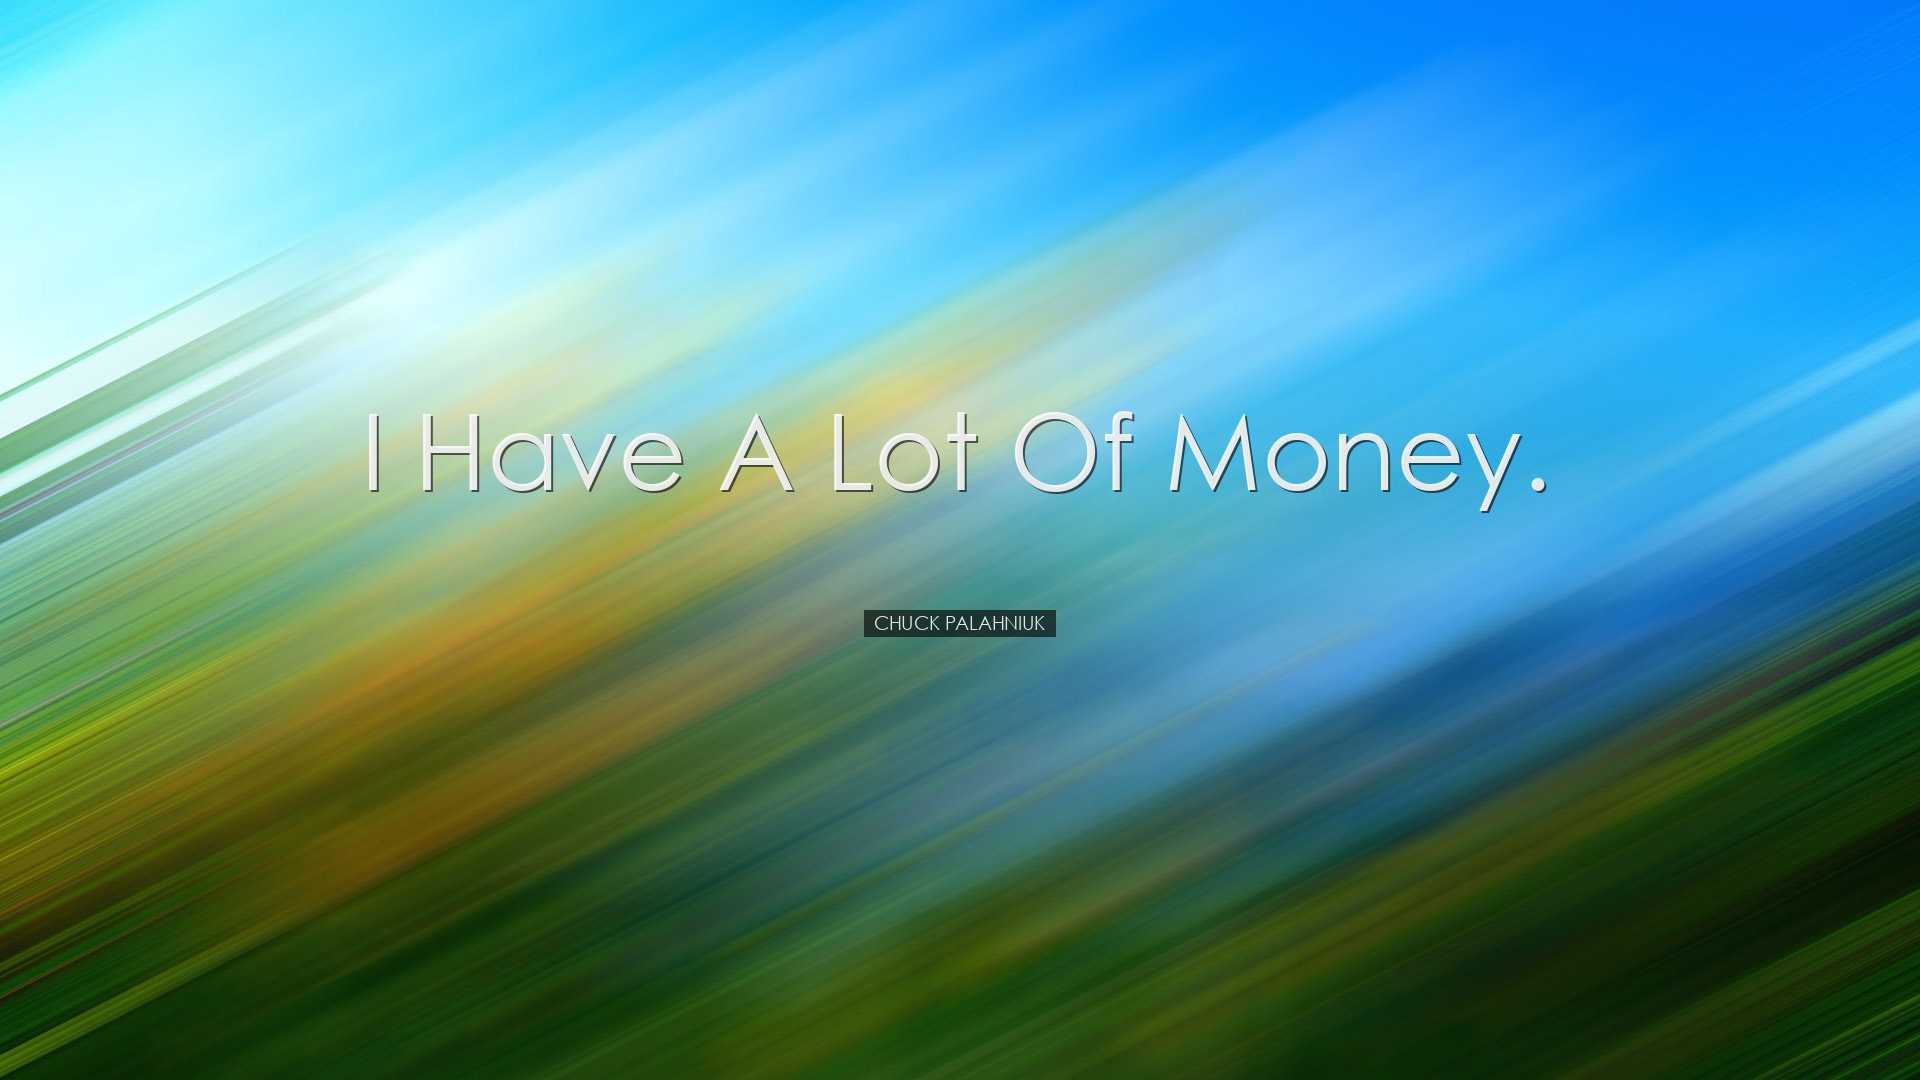 I have a lot of money. - Chuck Palahniuk